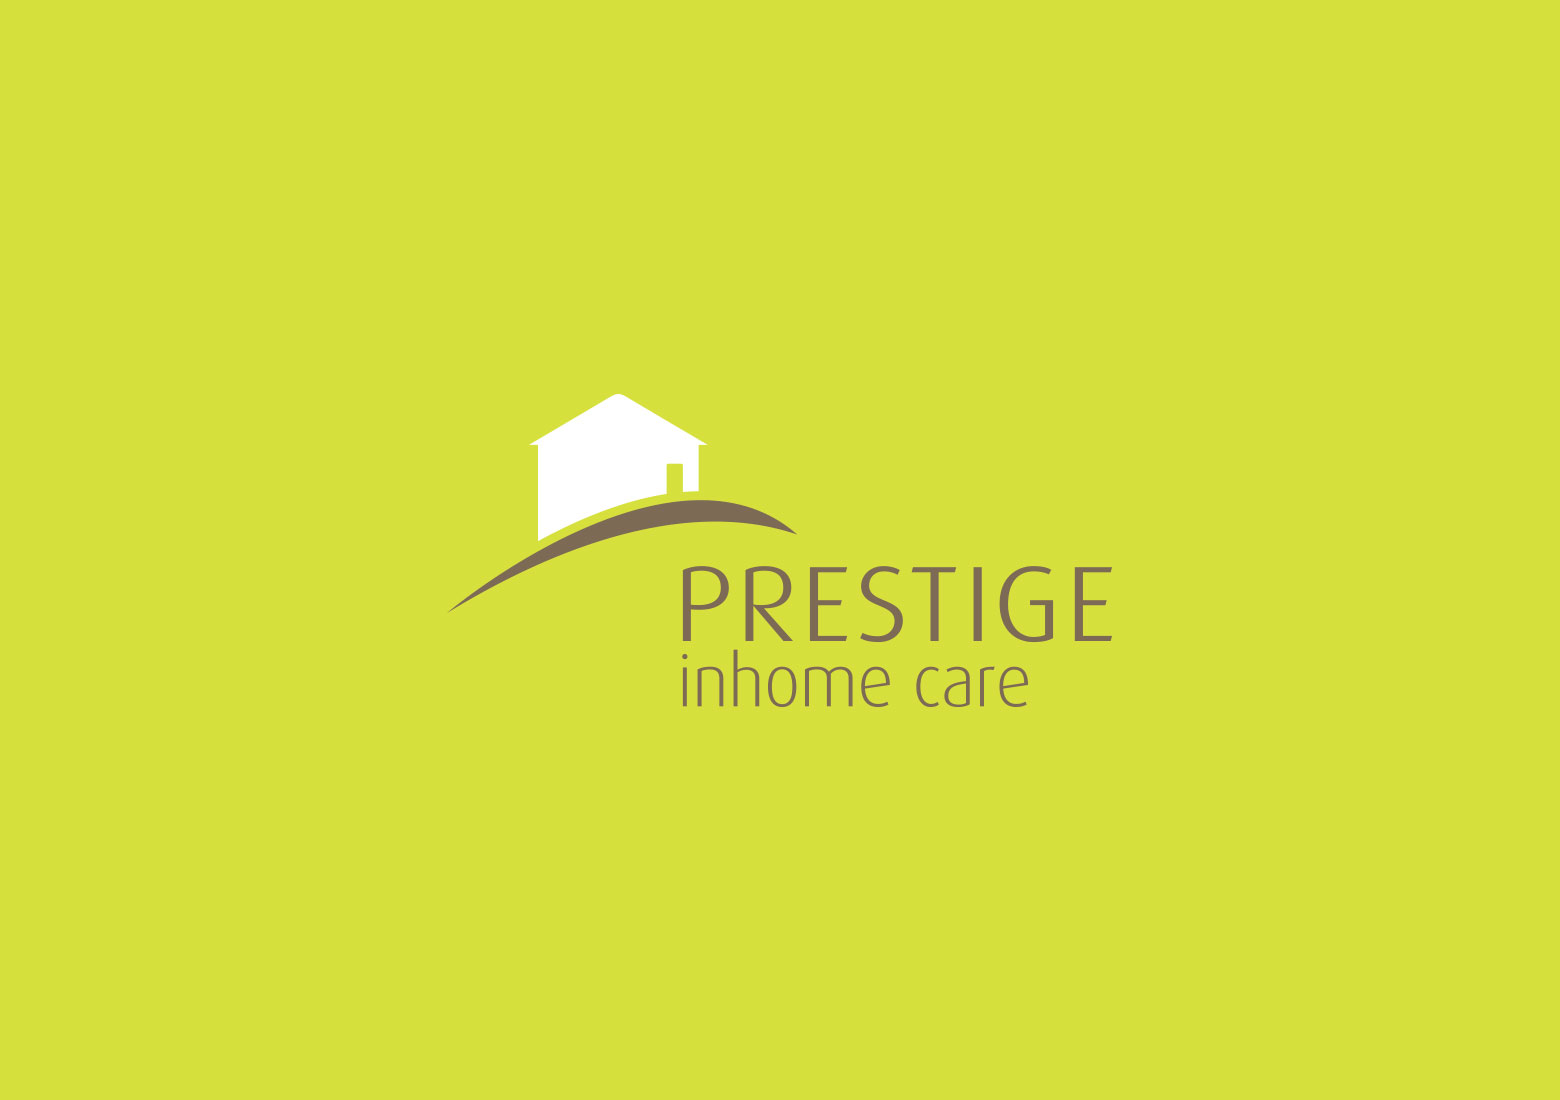 Prestige Inhome Care by Rising Creative